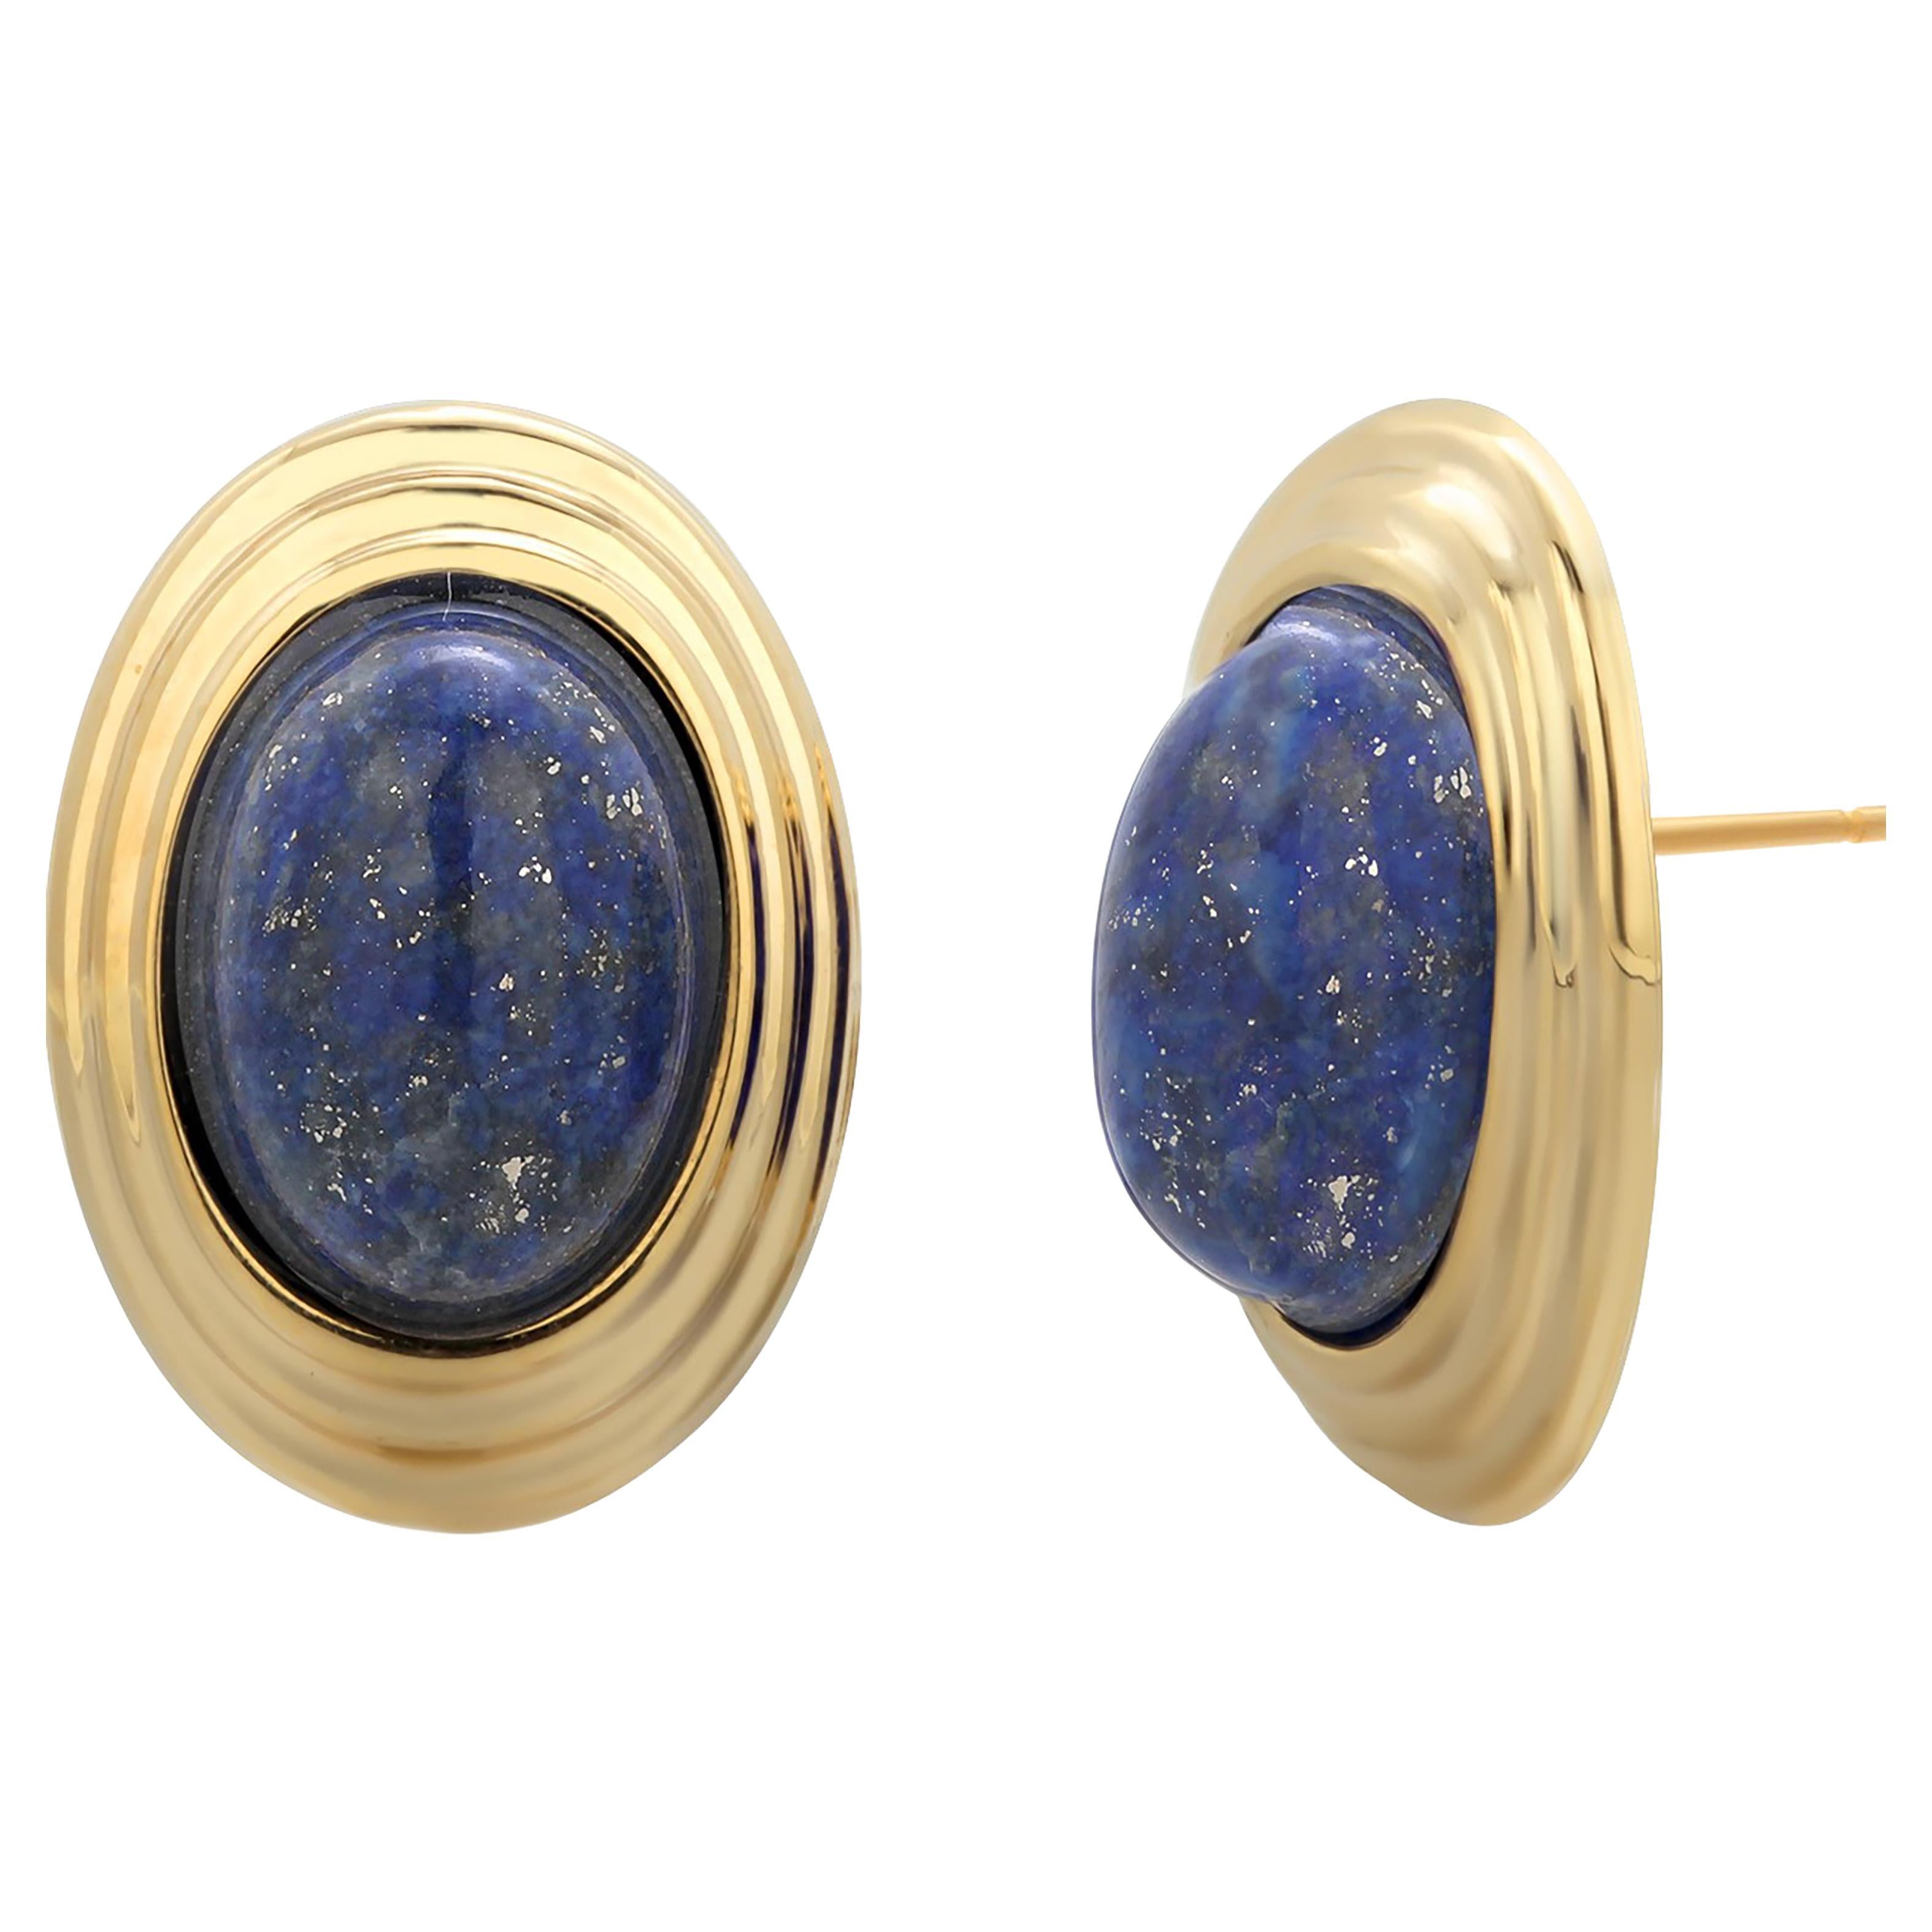 Large Blue Lapis Lazuli 14 Karat Yellow Gold 0.90 Inch Long Stud Earrings 